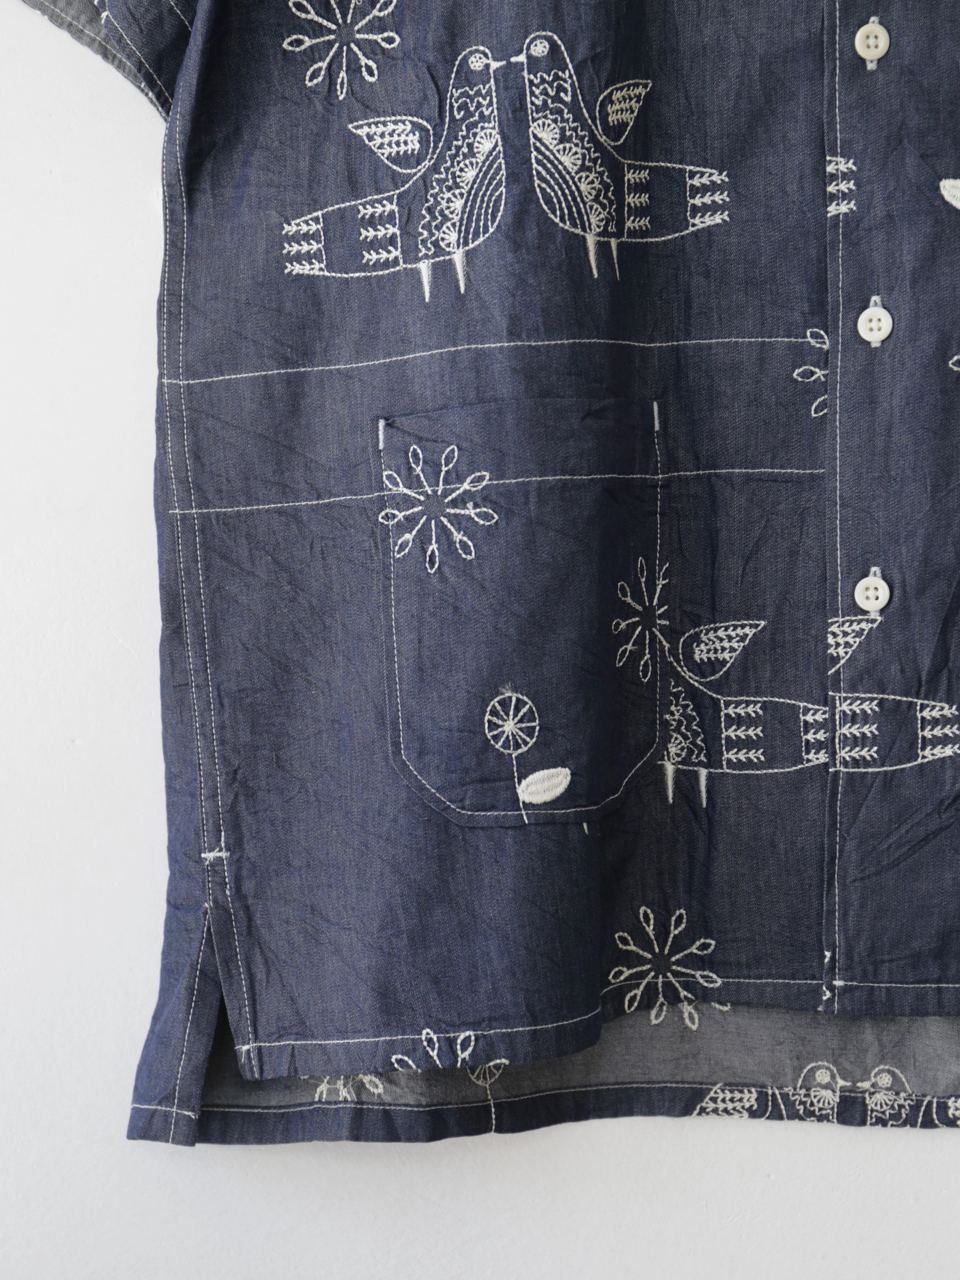 Engineered Garments Camp Shirt - Bird Embroidery Denim|セレクト ...